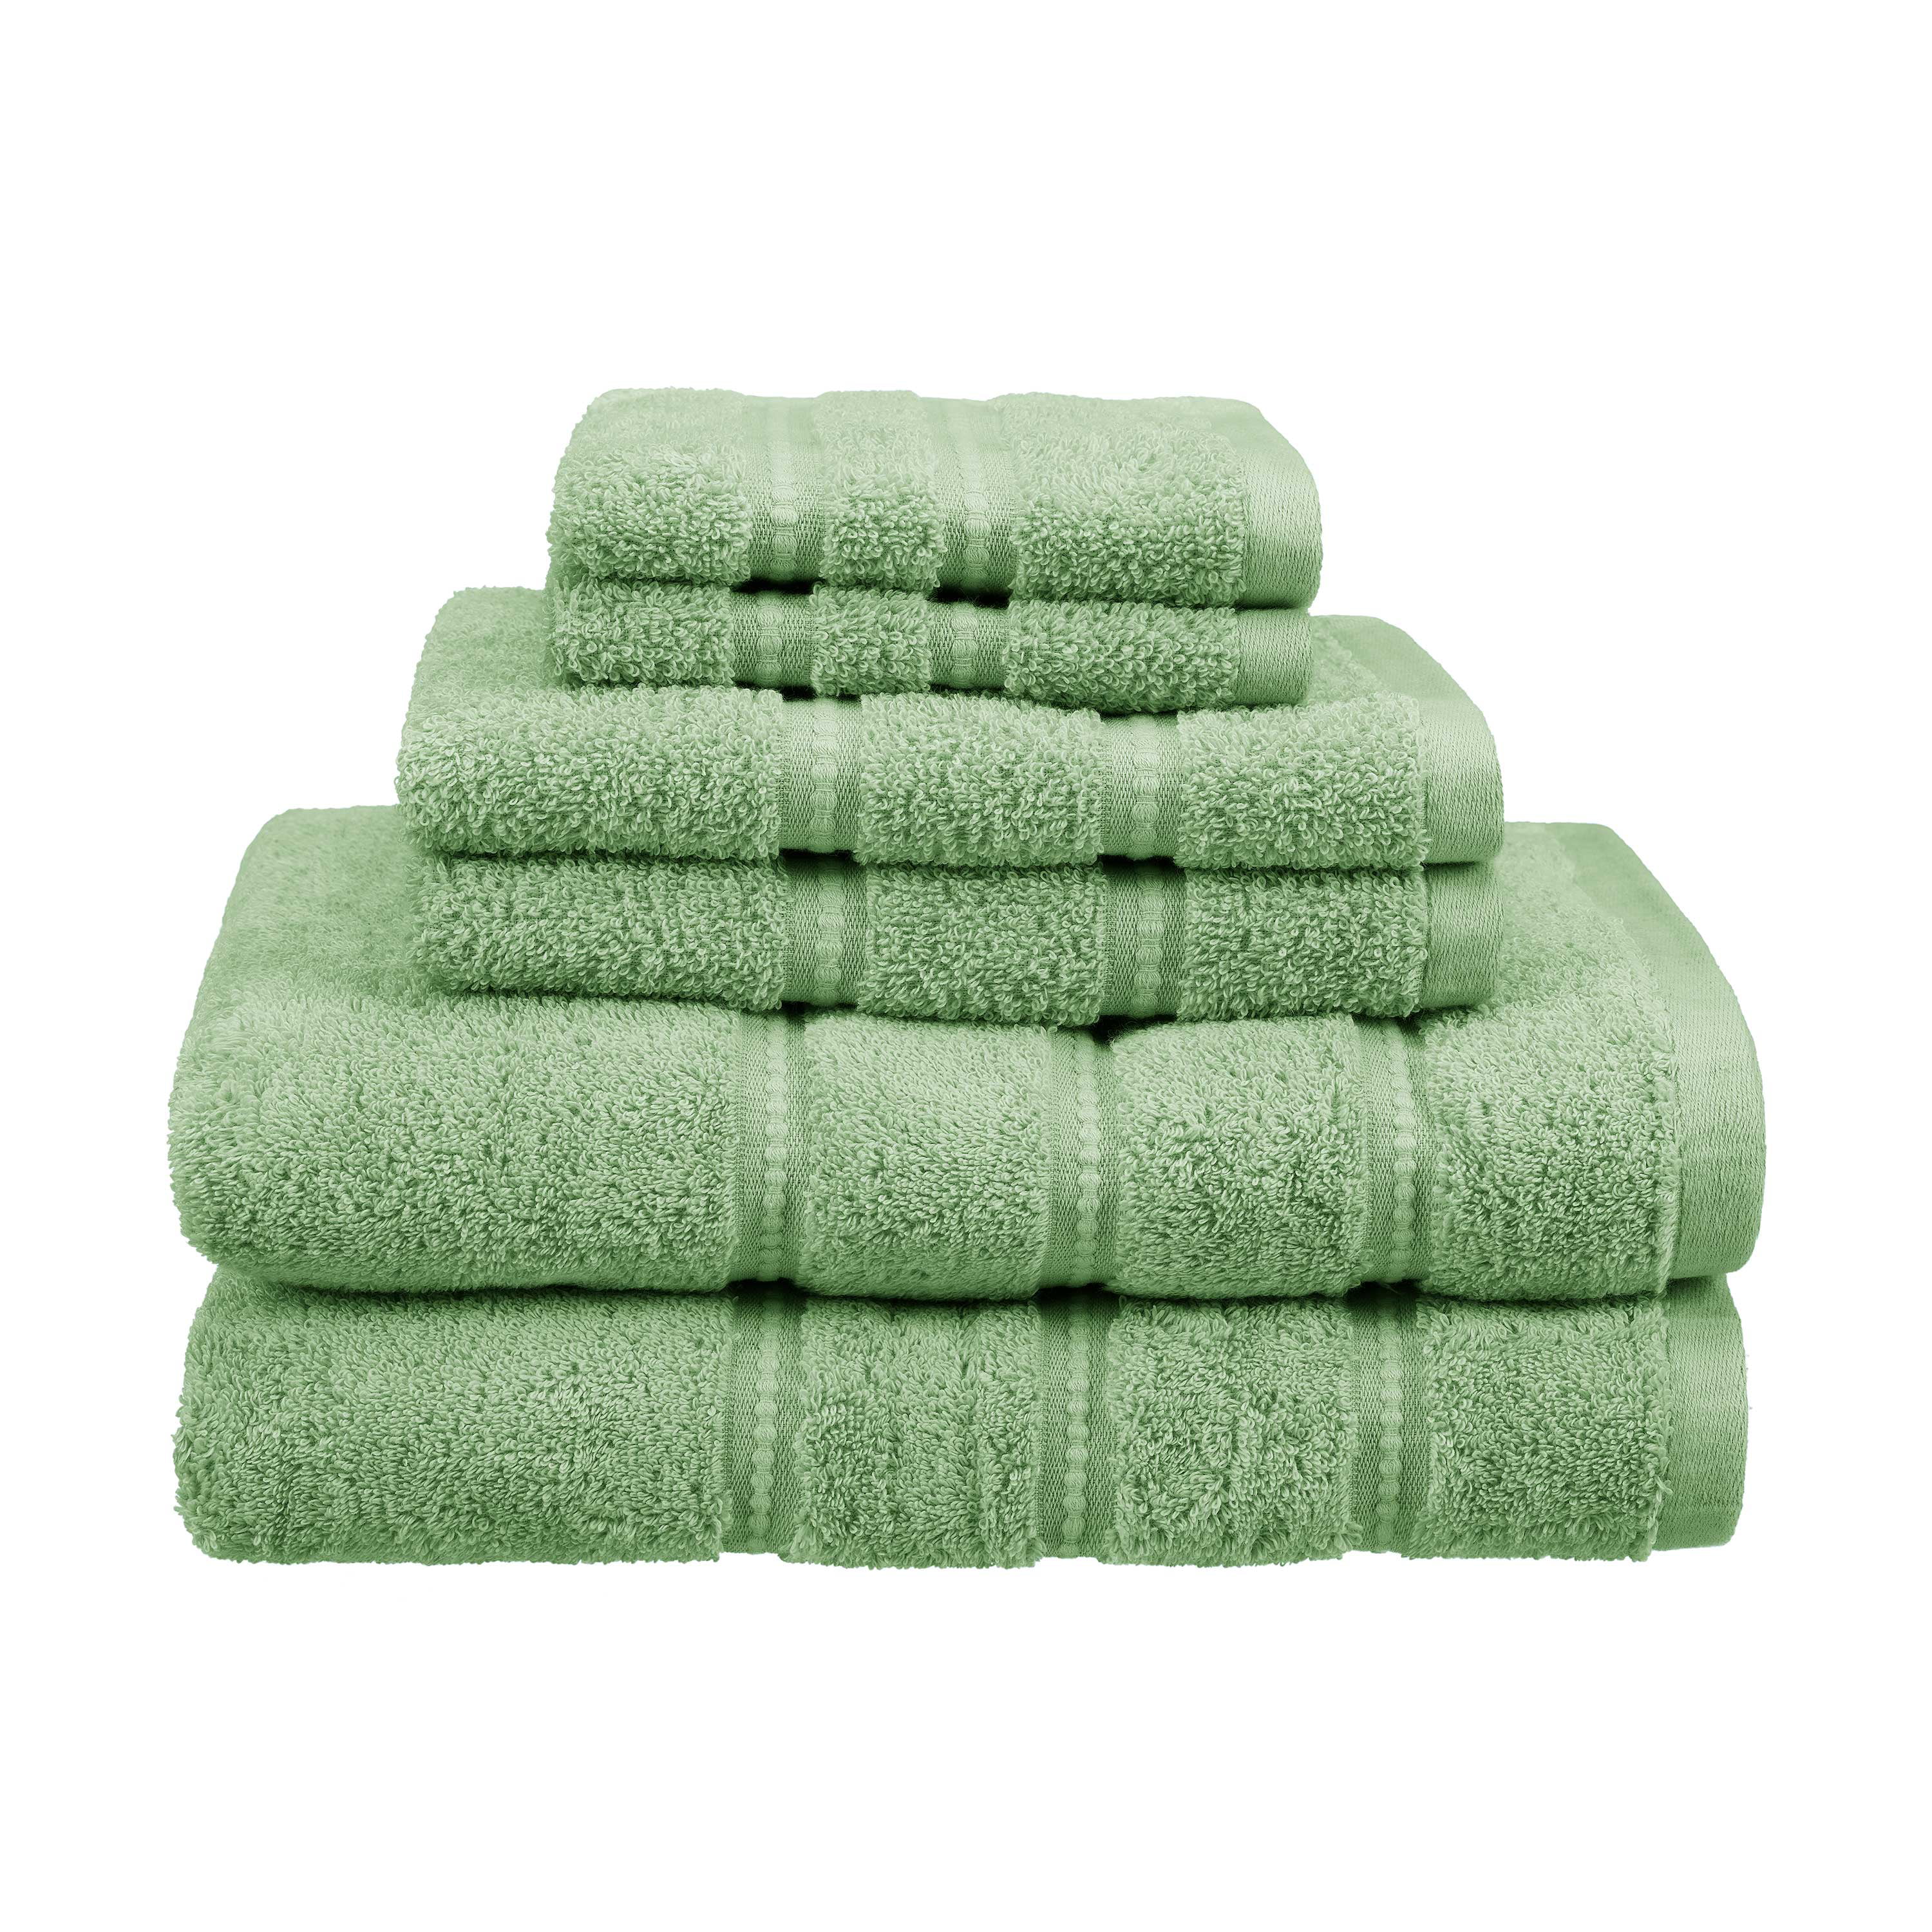 Mims 6 Piece 100% Cotton Towel Set Wrought Studio Color: Aqua